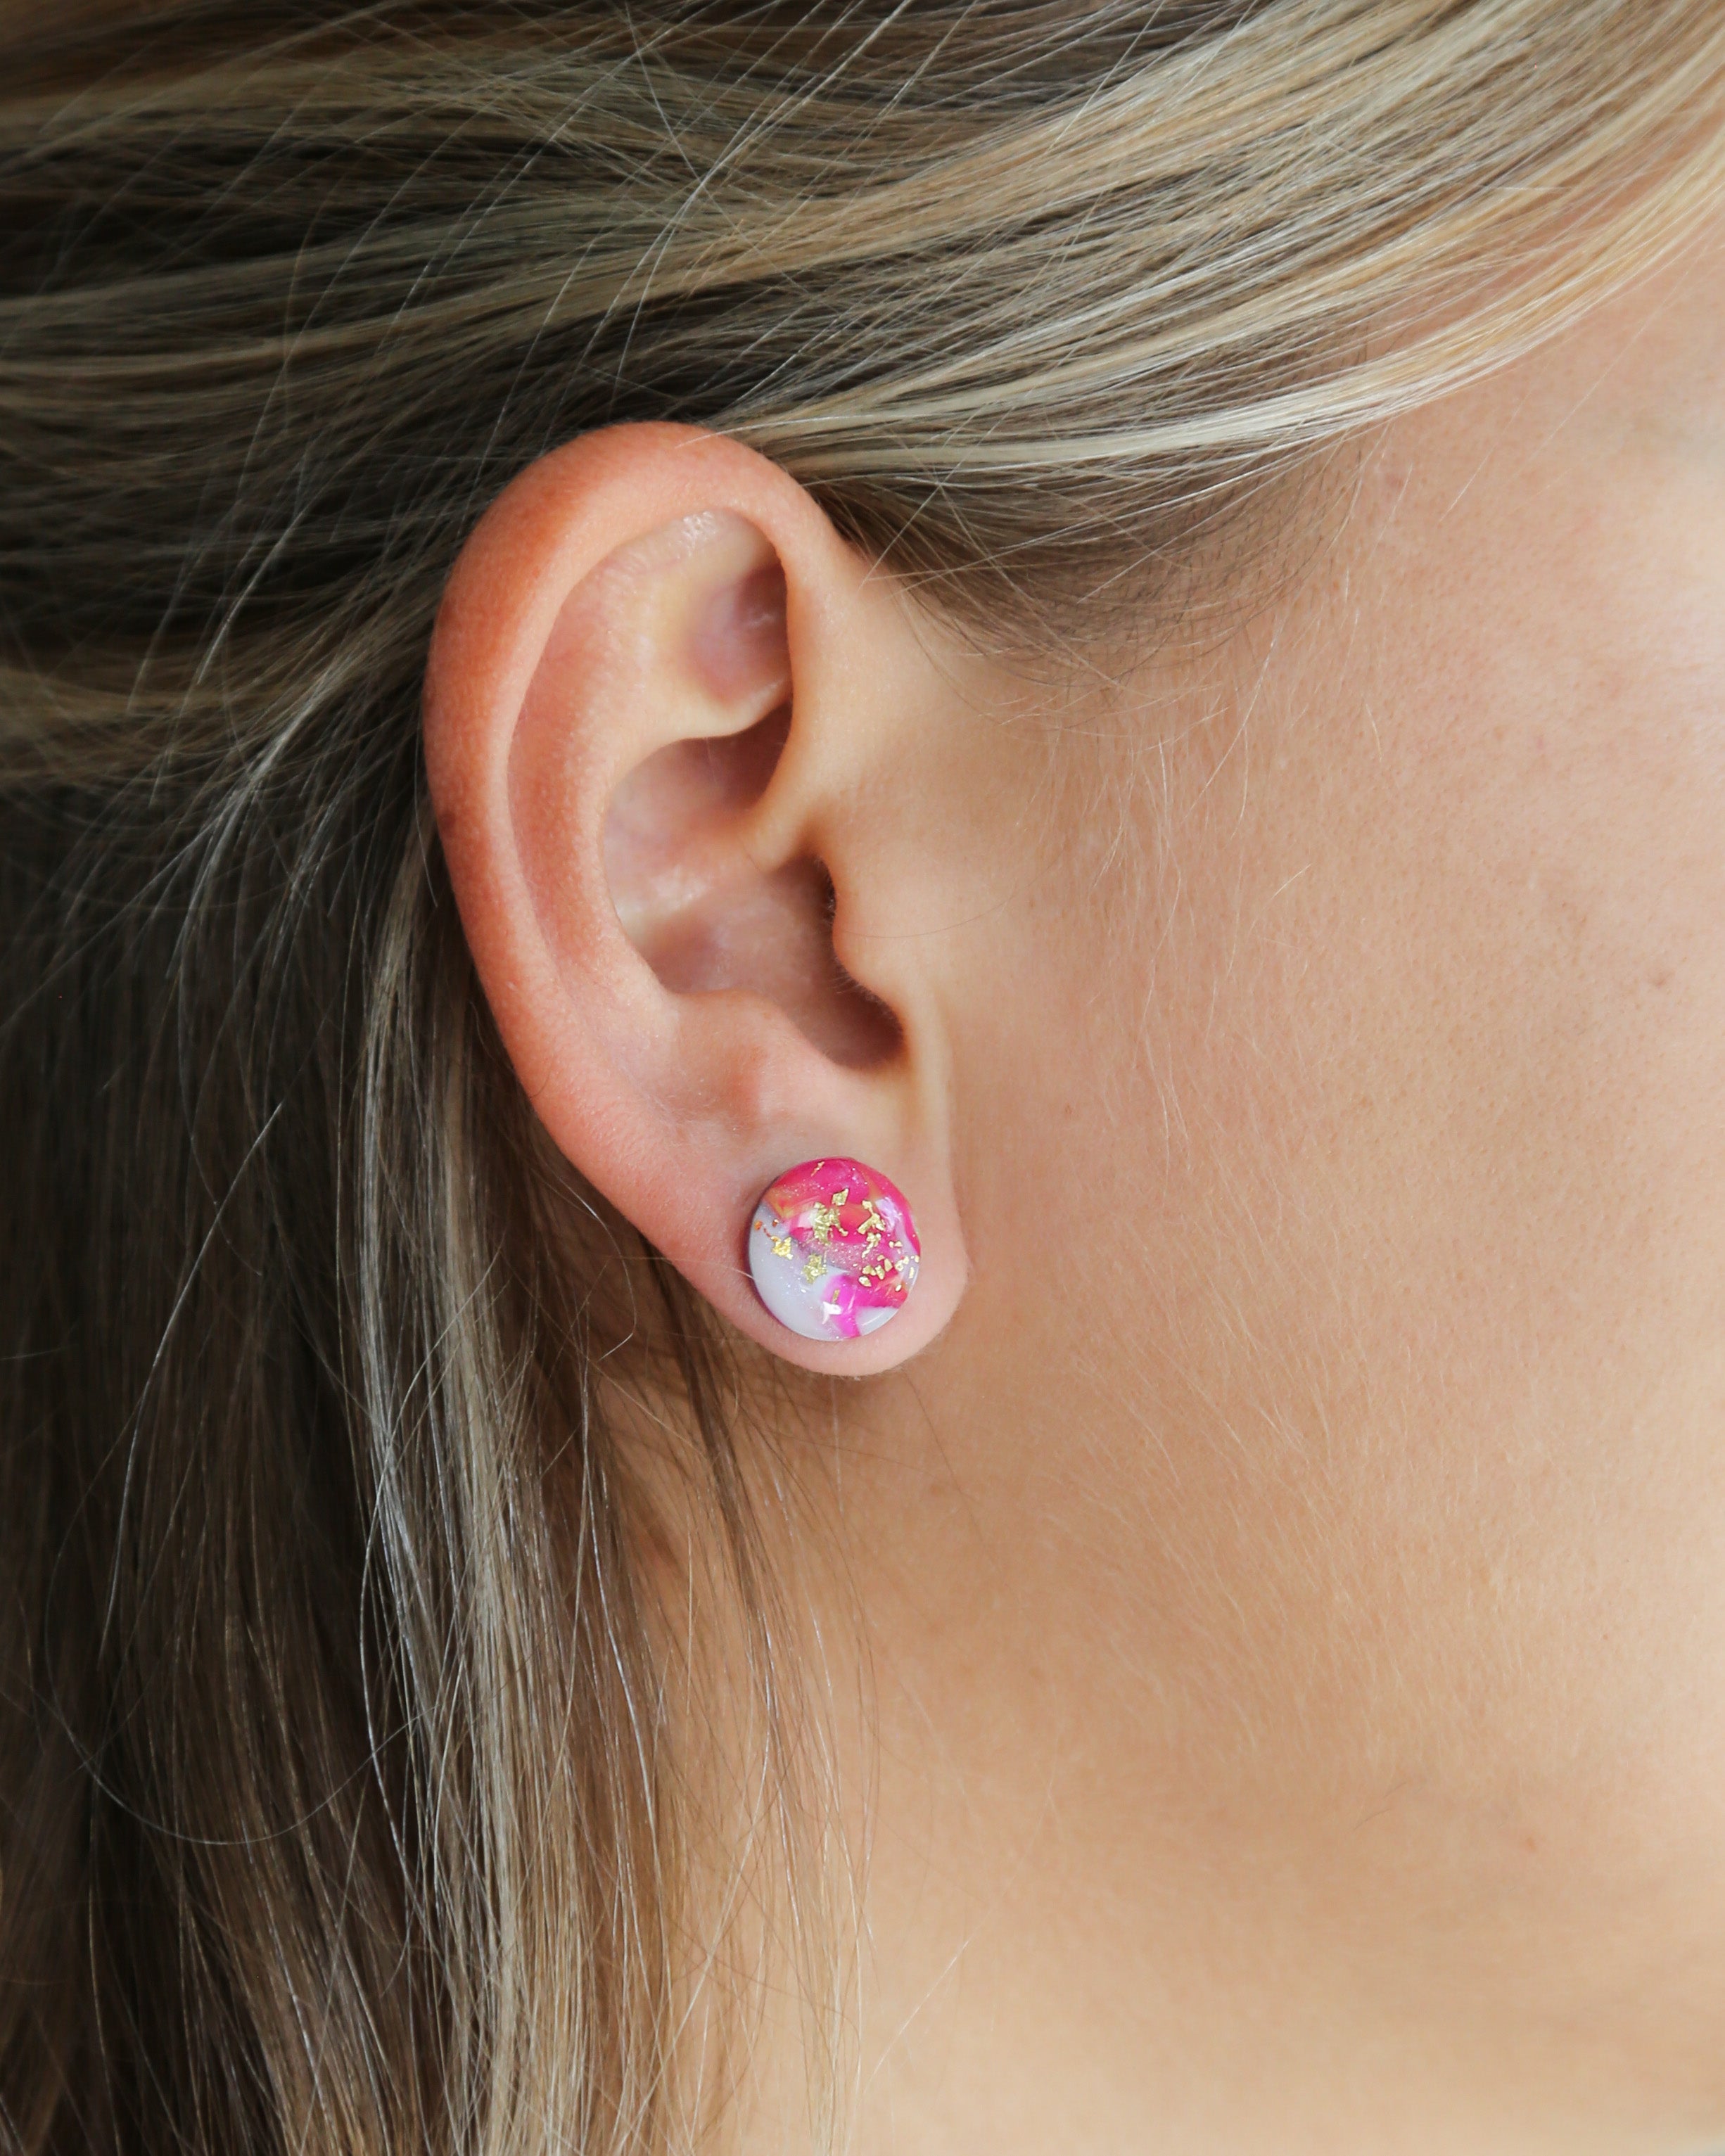 Bright surgical steel earrings Hypoallergenic earrings for sensitive ears